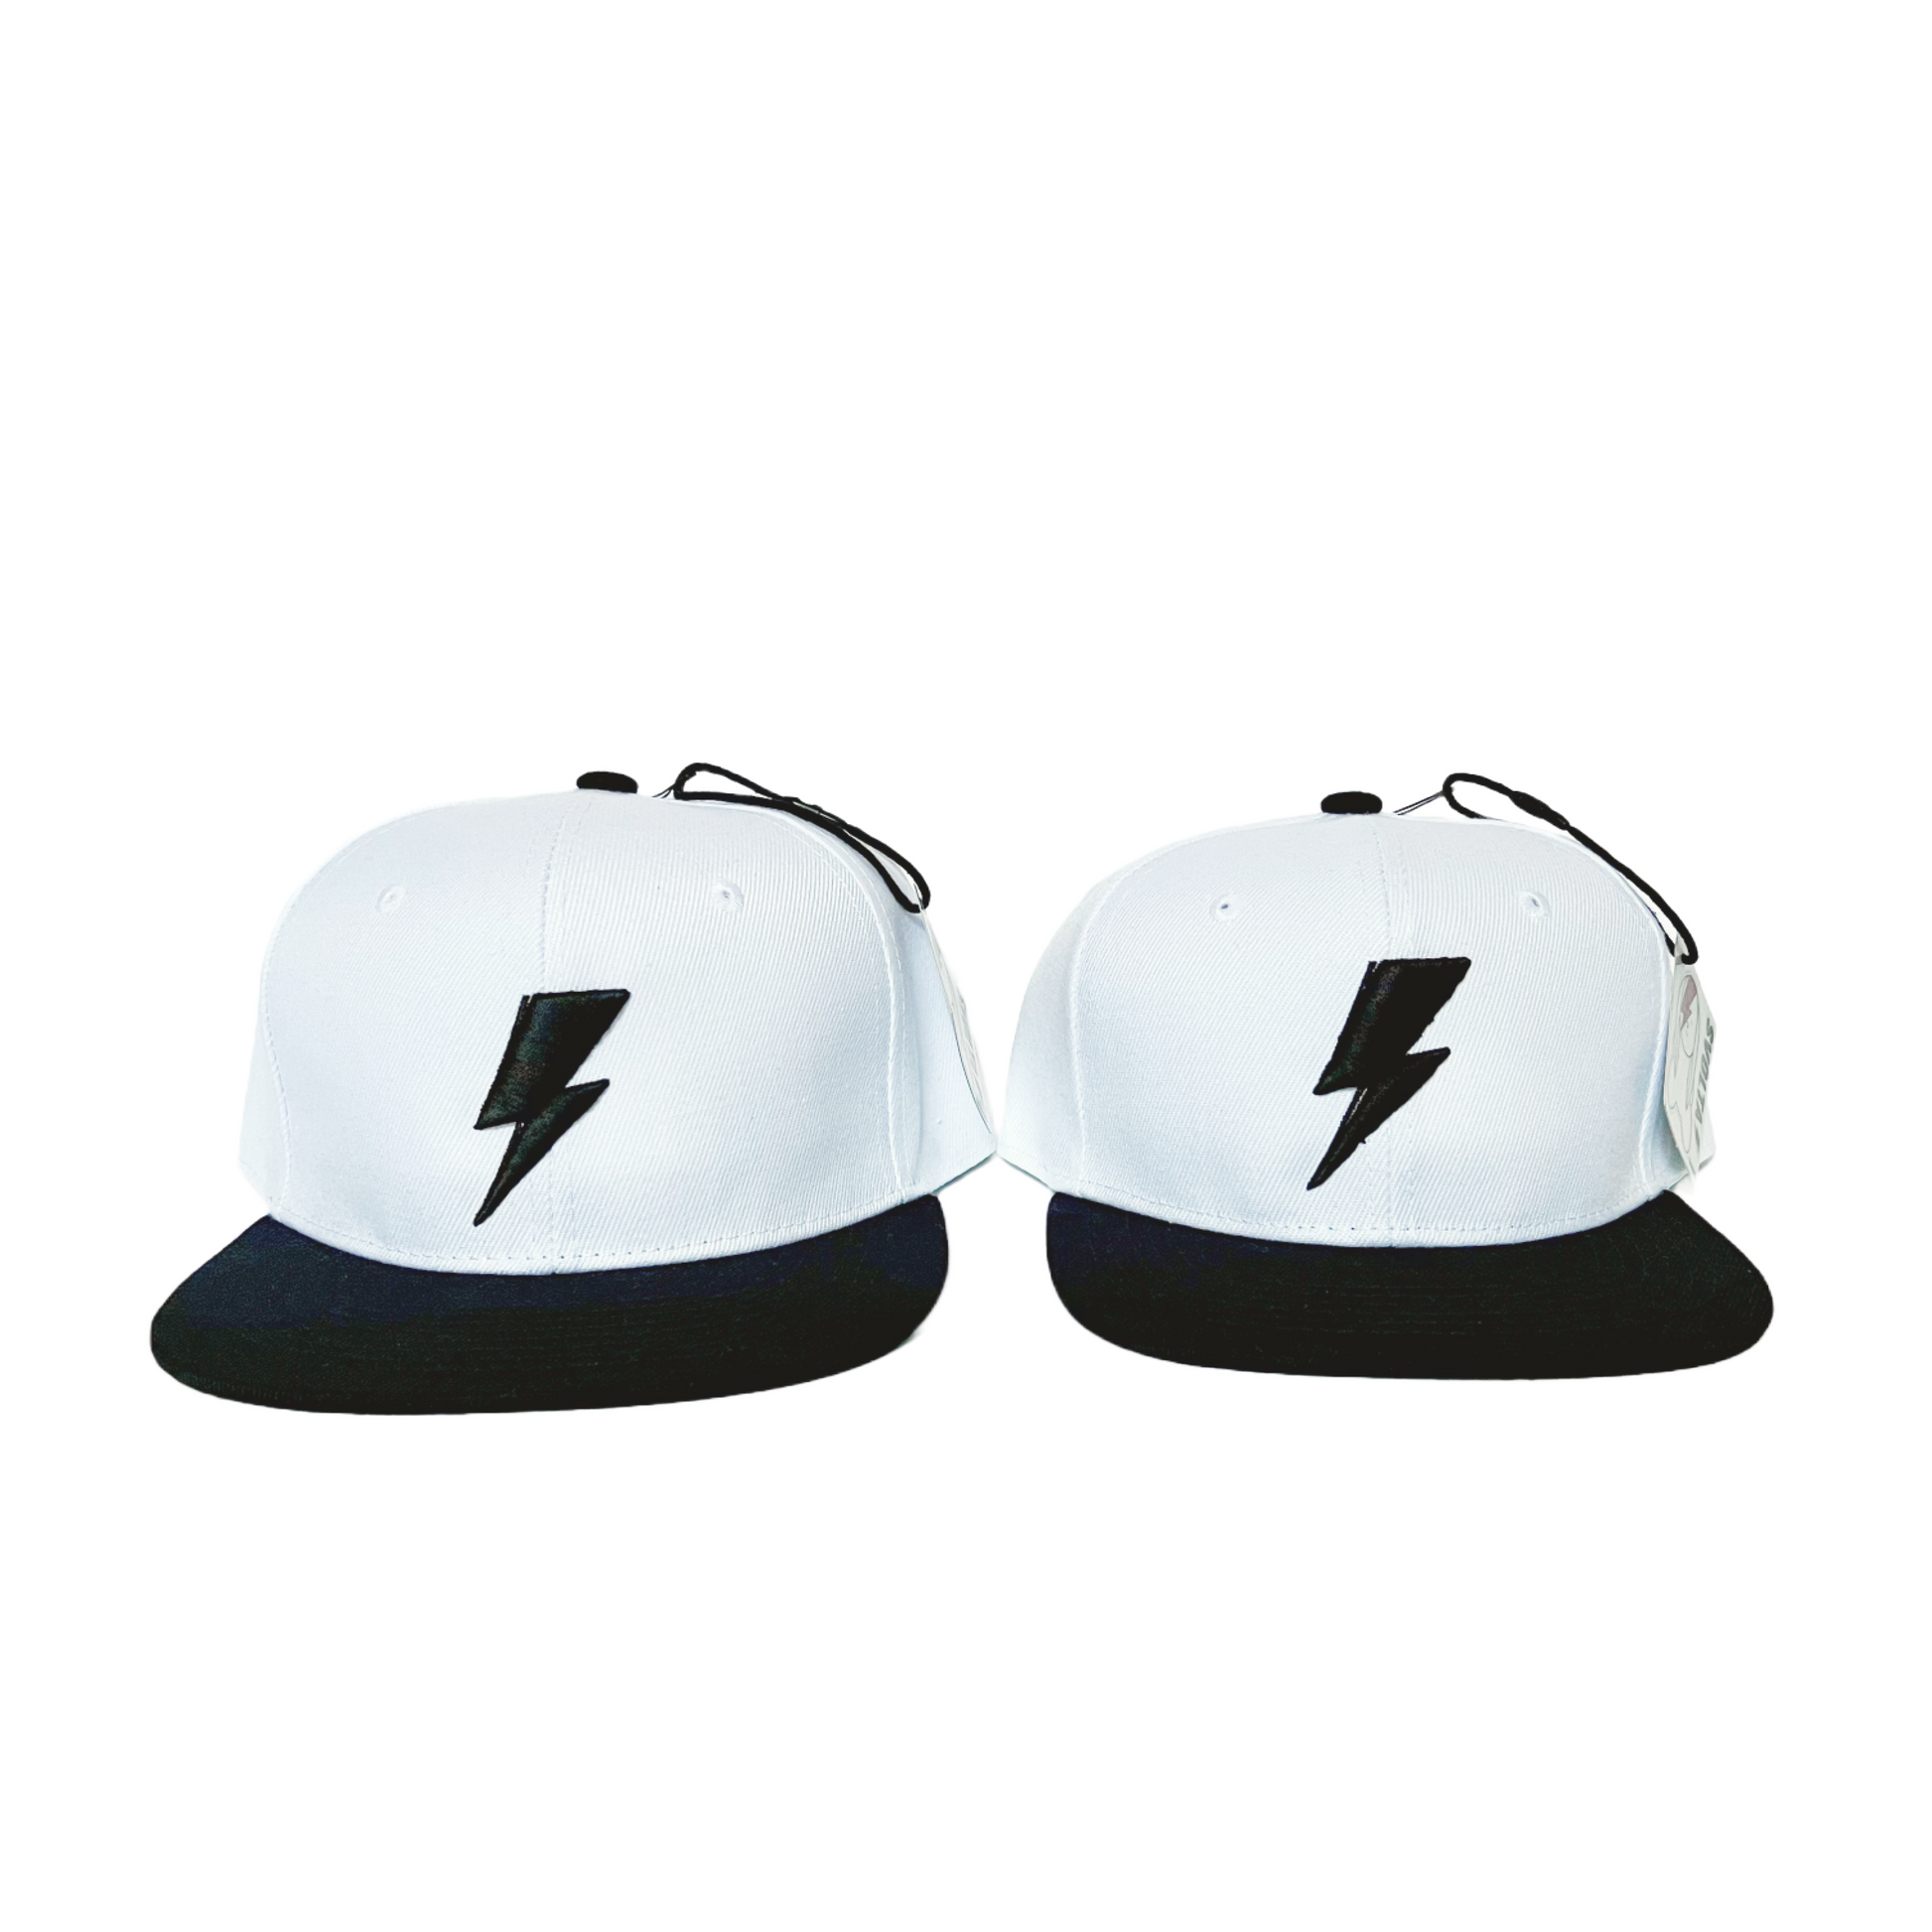 Svolta Adult Child Kids snapback hats 3D embroidered lightning bolt white black